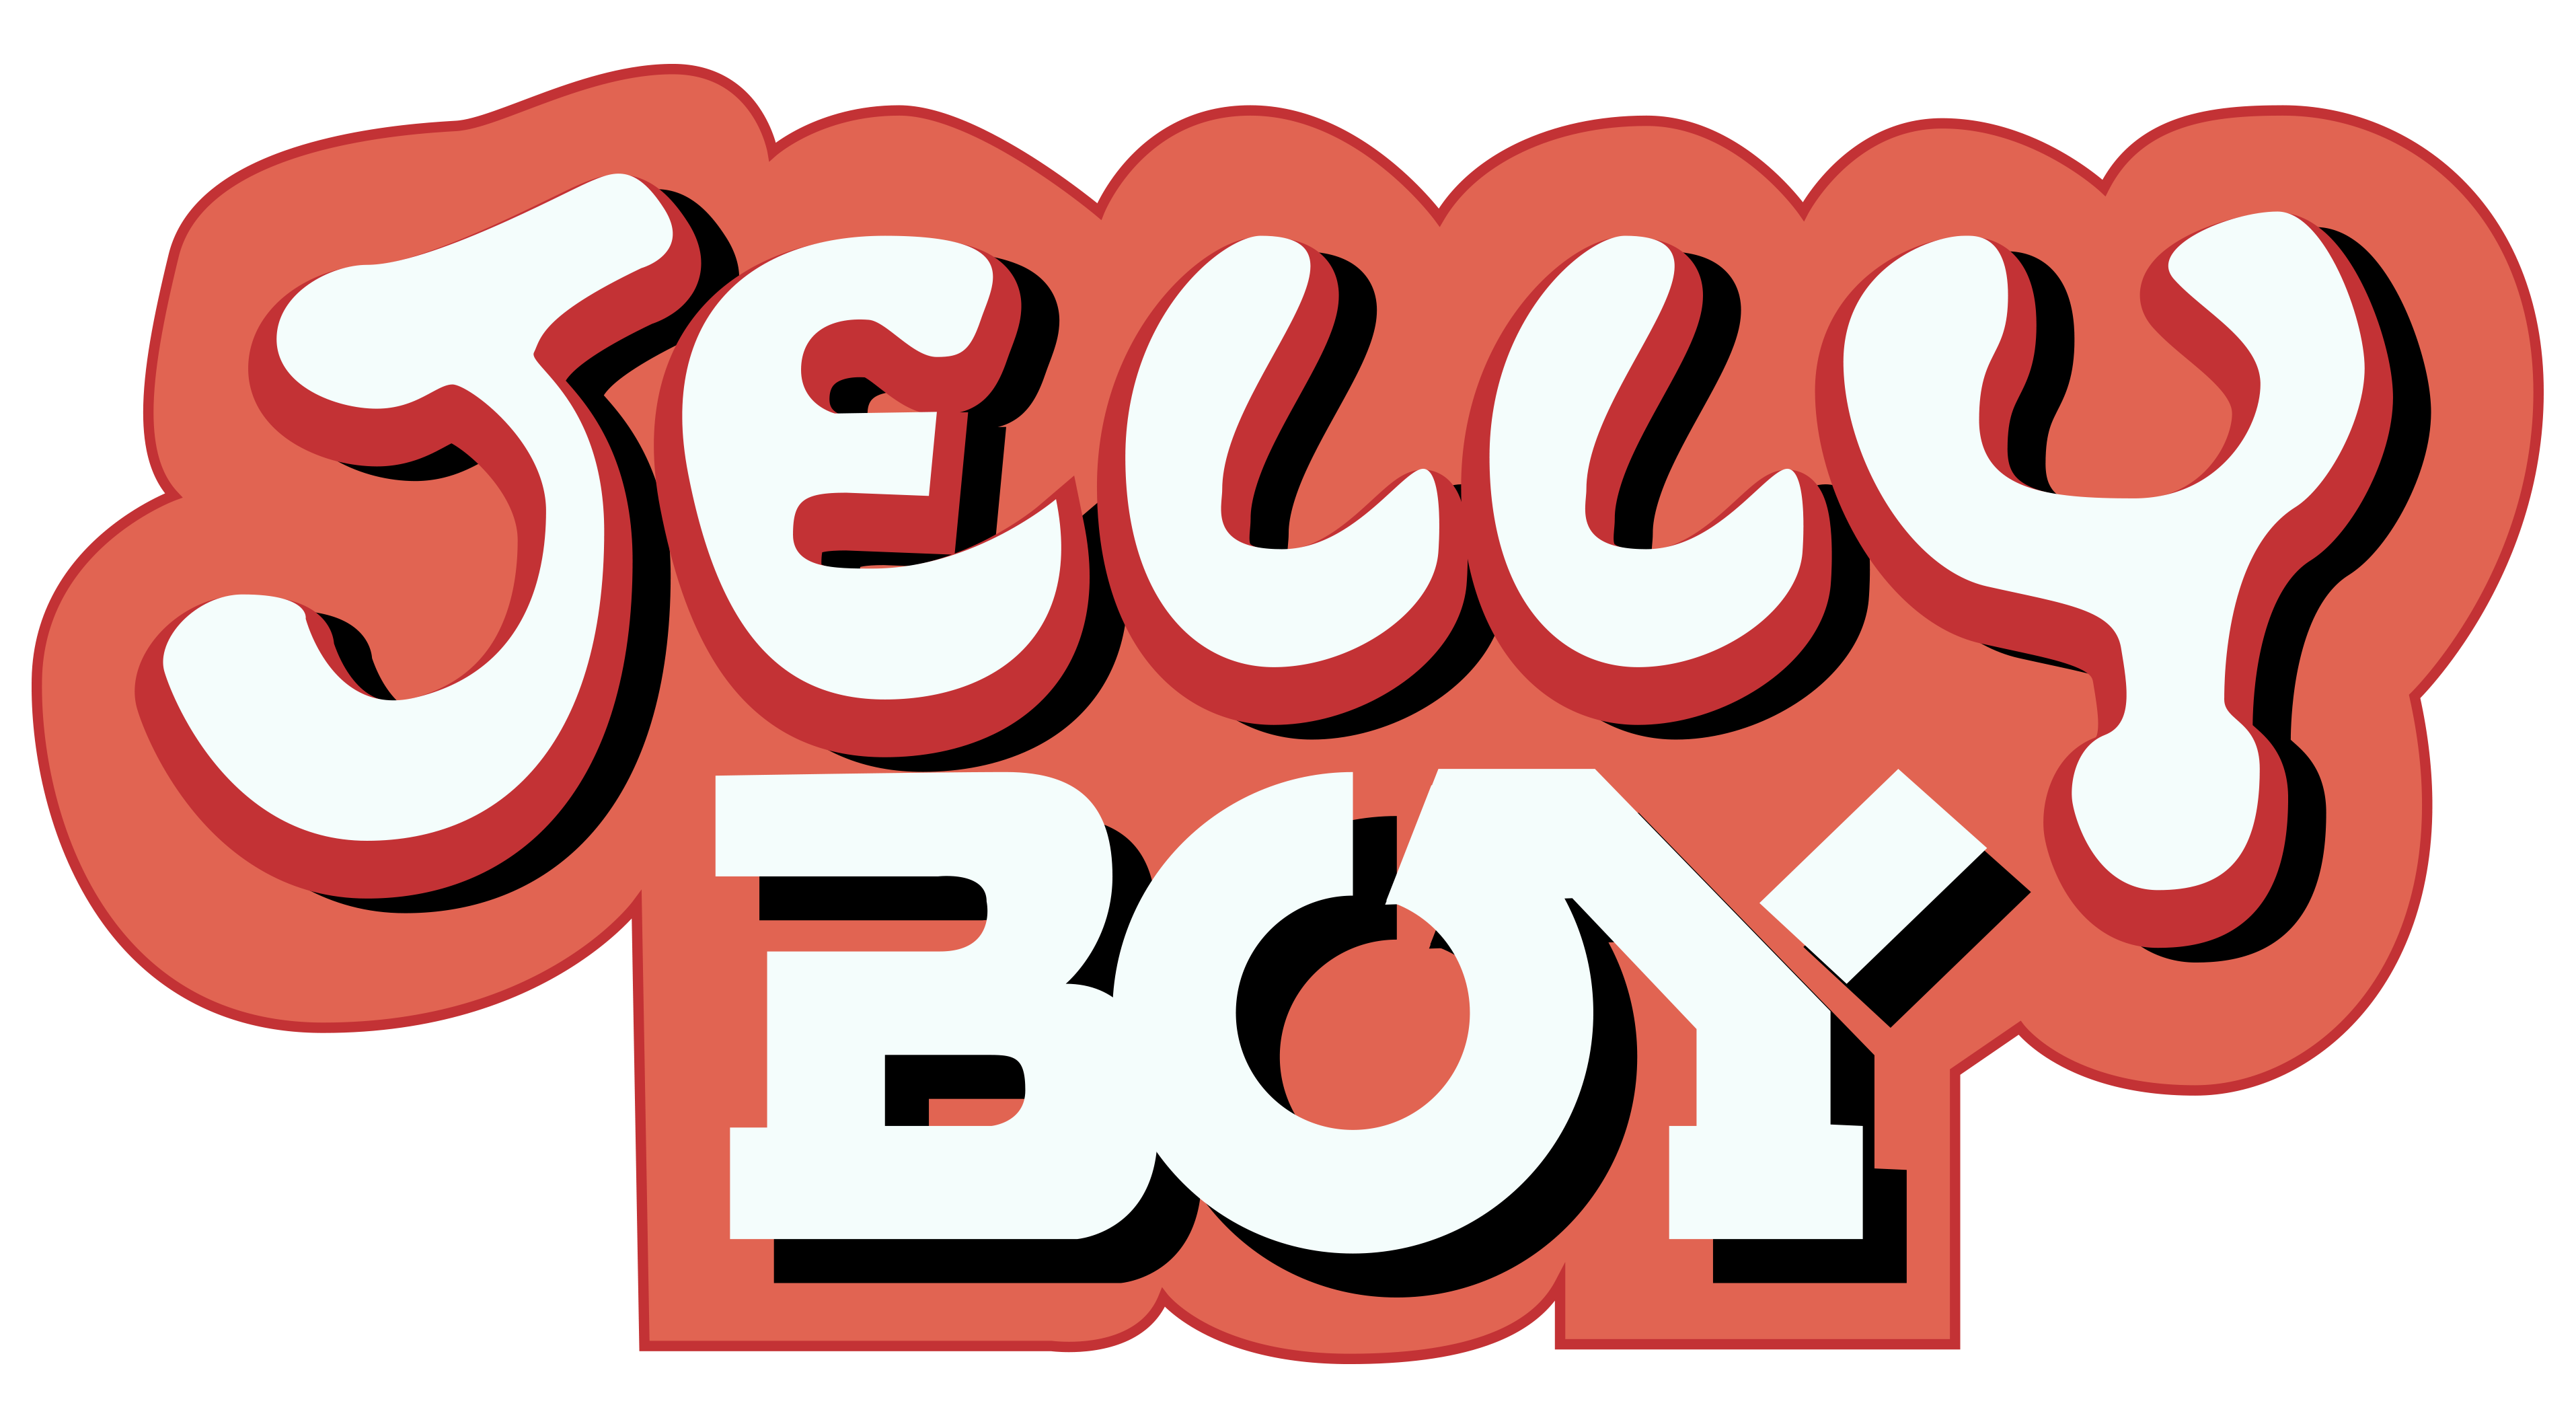 Adobe Nintendo. Jelly boy Snes. Jelly boy orion